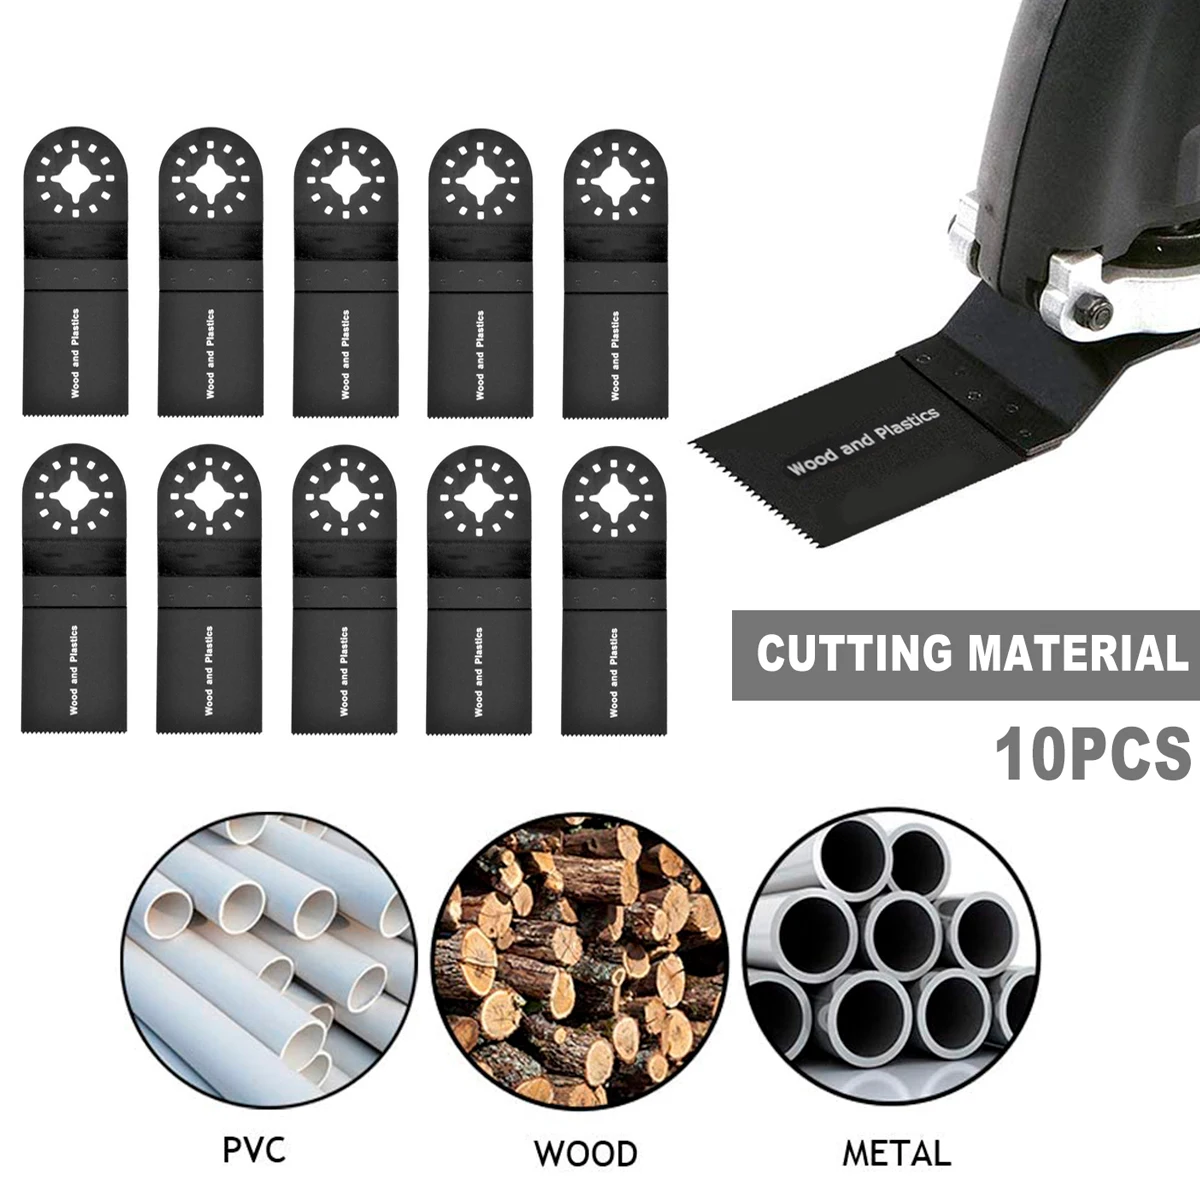 

10pcs HCS Oscillating Saw Blades 35mm Multitool Professional Fast Release Swing Blades for Metal Wood Plastic Cutting Tools Set